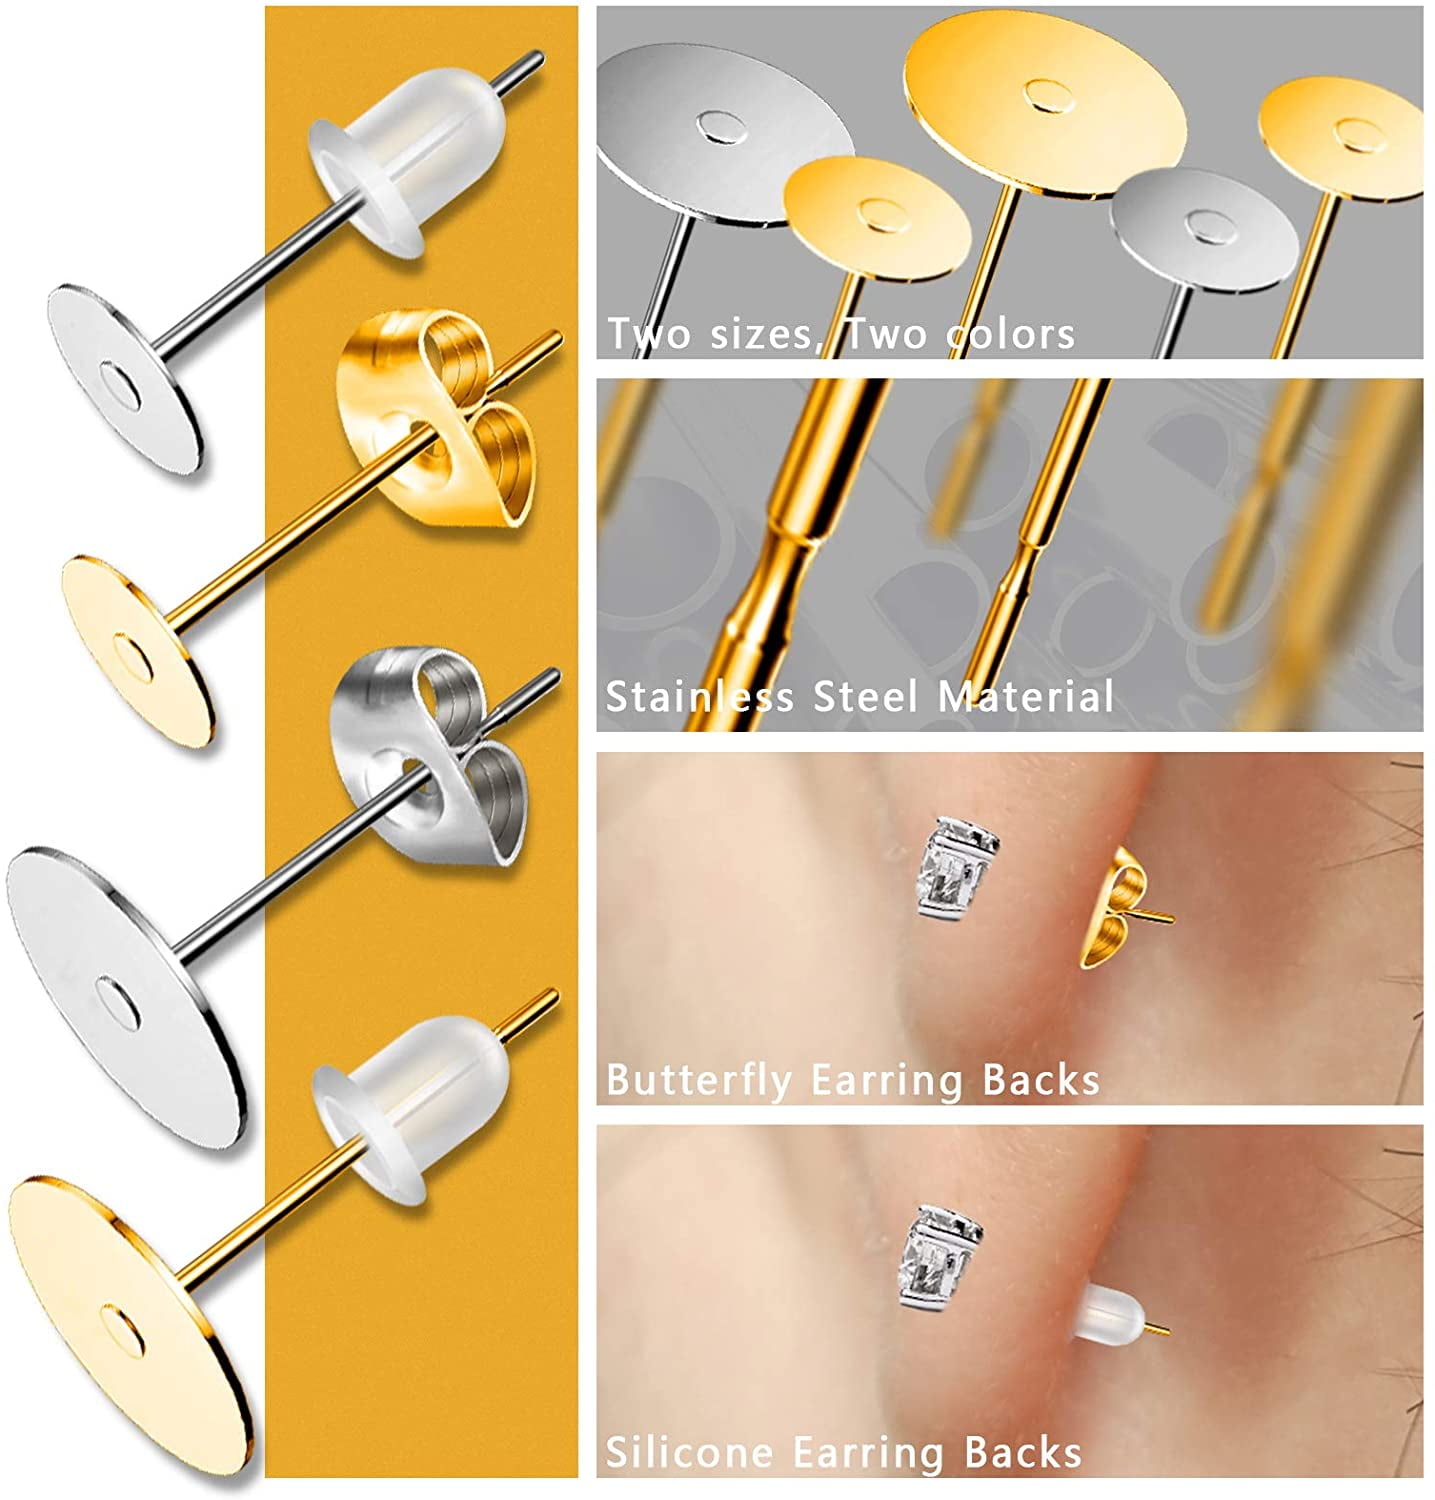  1460 Pcs Earring Making Kit Hypoallergenic Earring Posts and  Backs for Jewelry Making Findings DIY Earring Studs Butterfly Earring Backs  Rubber Bullet Earring Backs Earrings Flat Pad with Blank Pin 